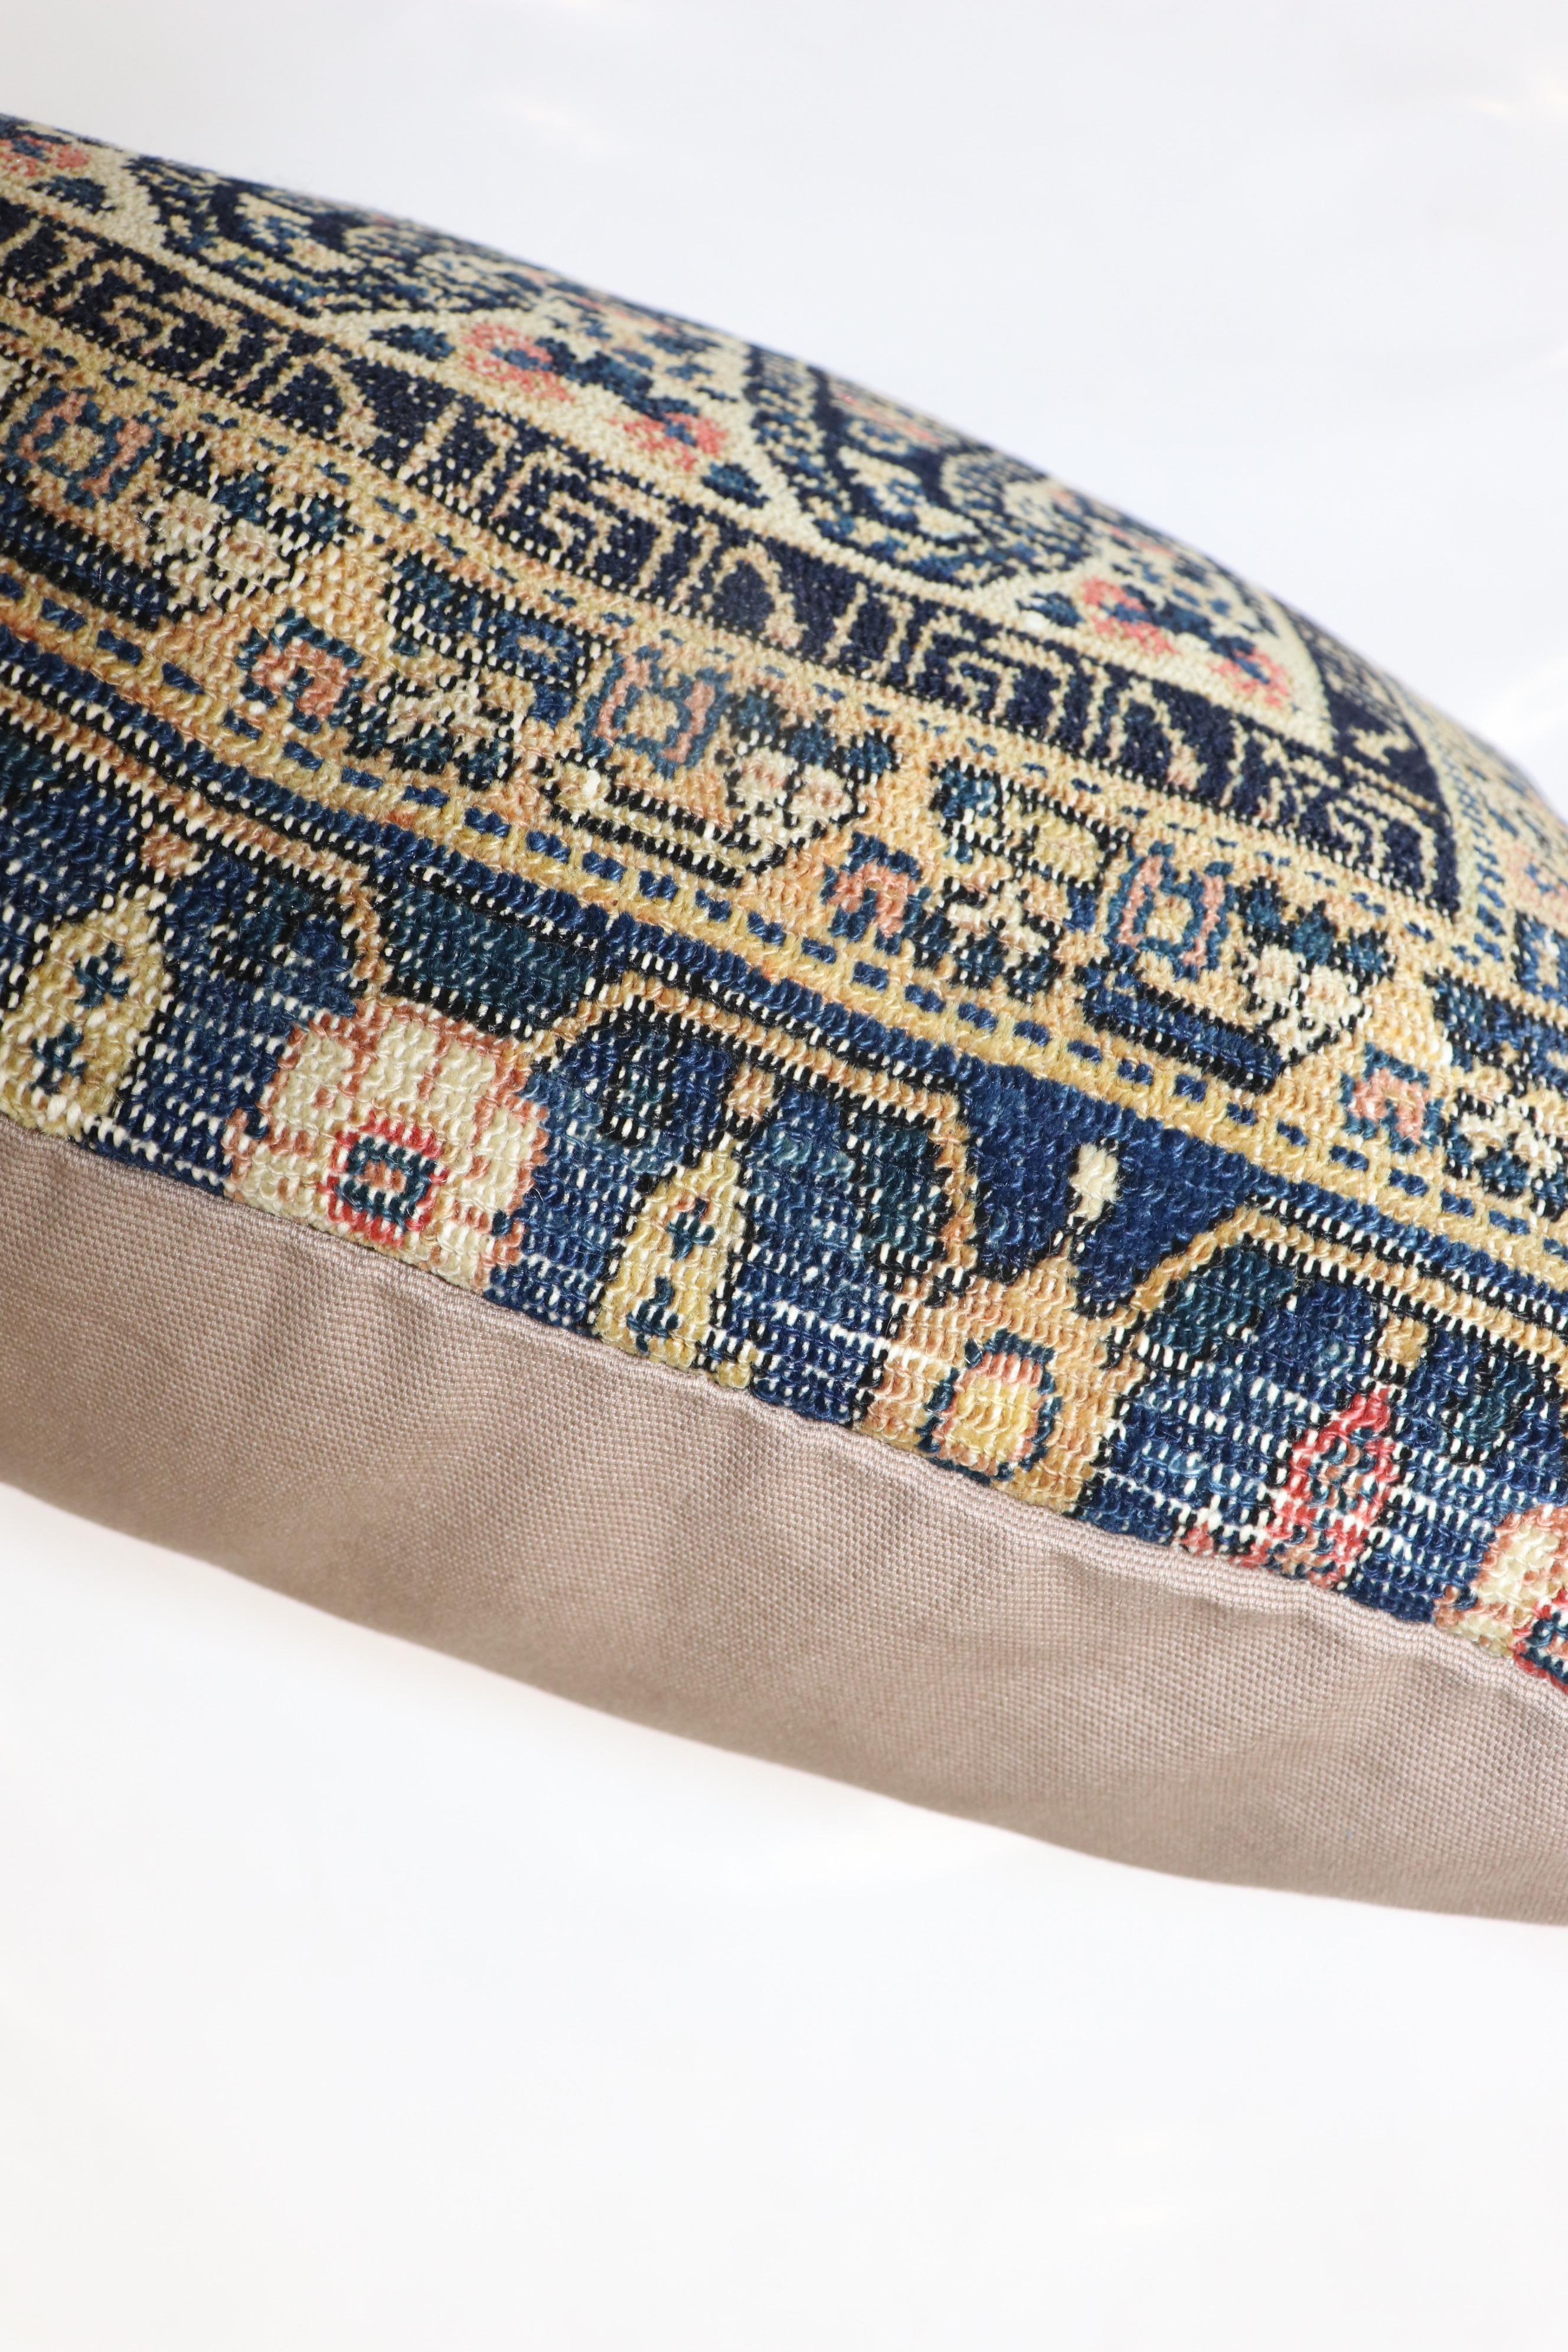 Tabriz Bolster Size Antique Persian Senneh Rug Pillow For Sale